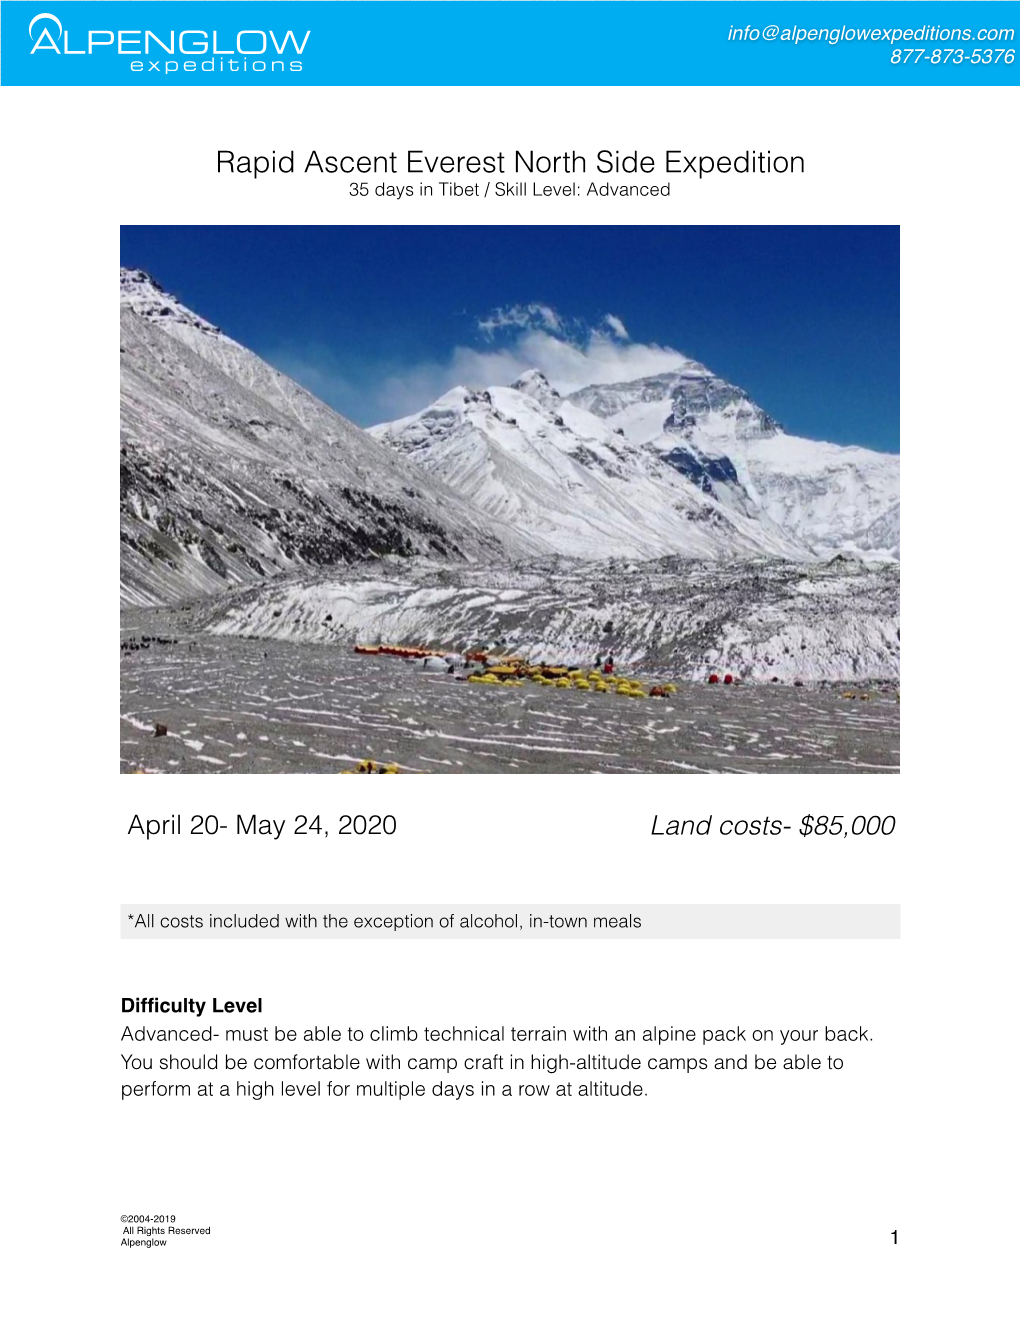 Everest North Side 2020